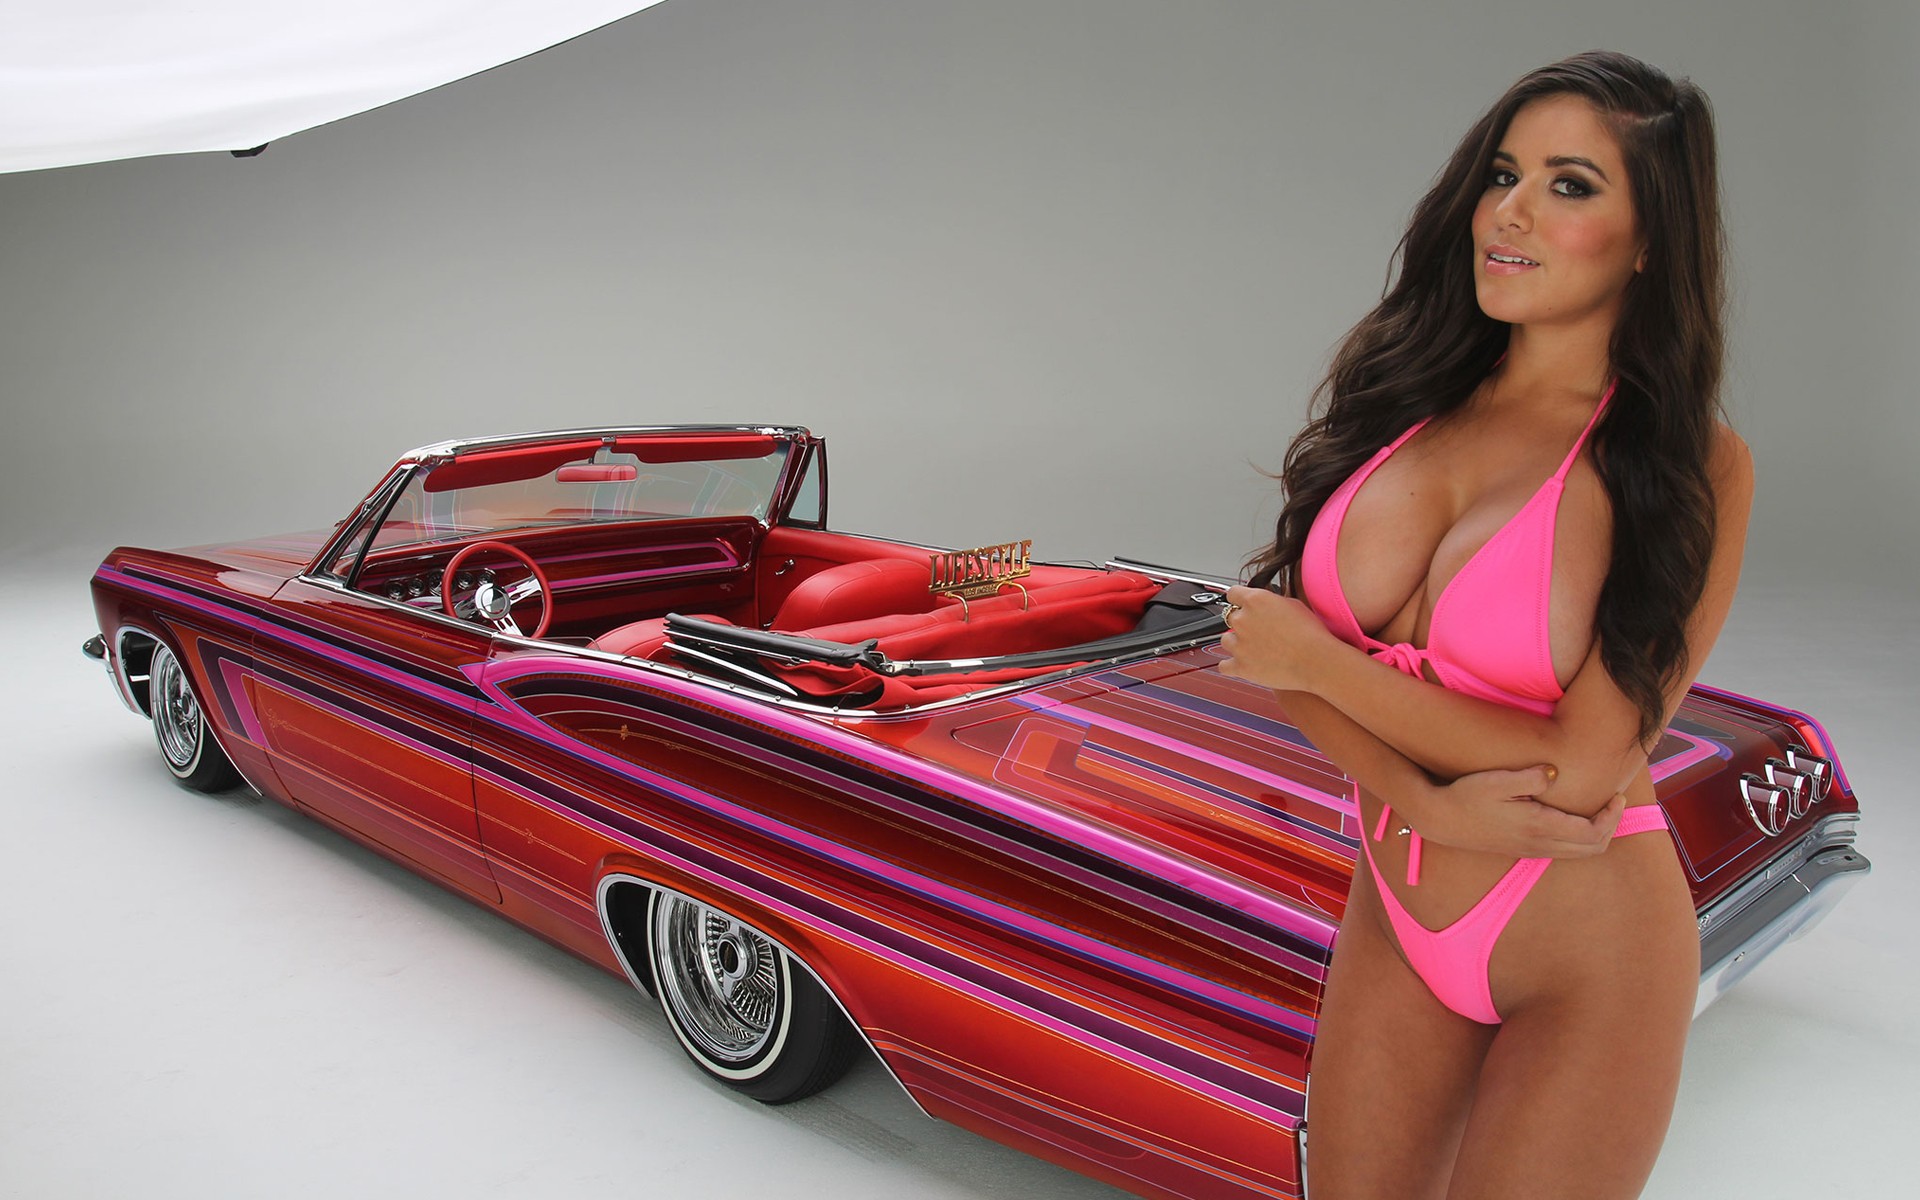 Wallpaper Chevrolet Impala Convertible, natural boobs, bikini, brunette, mo...